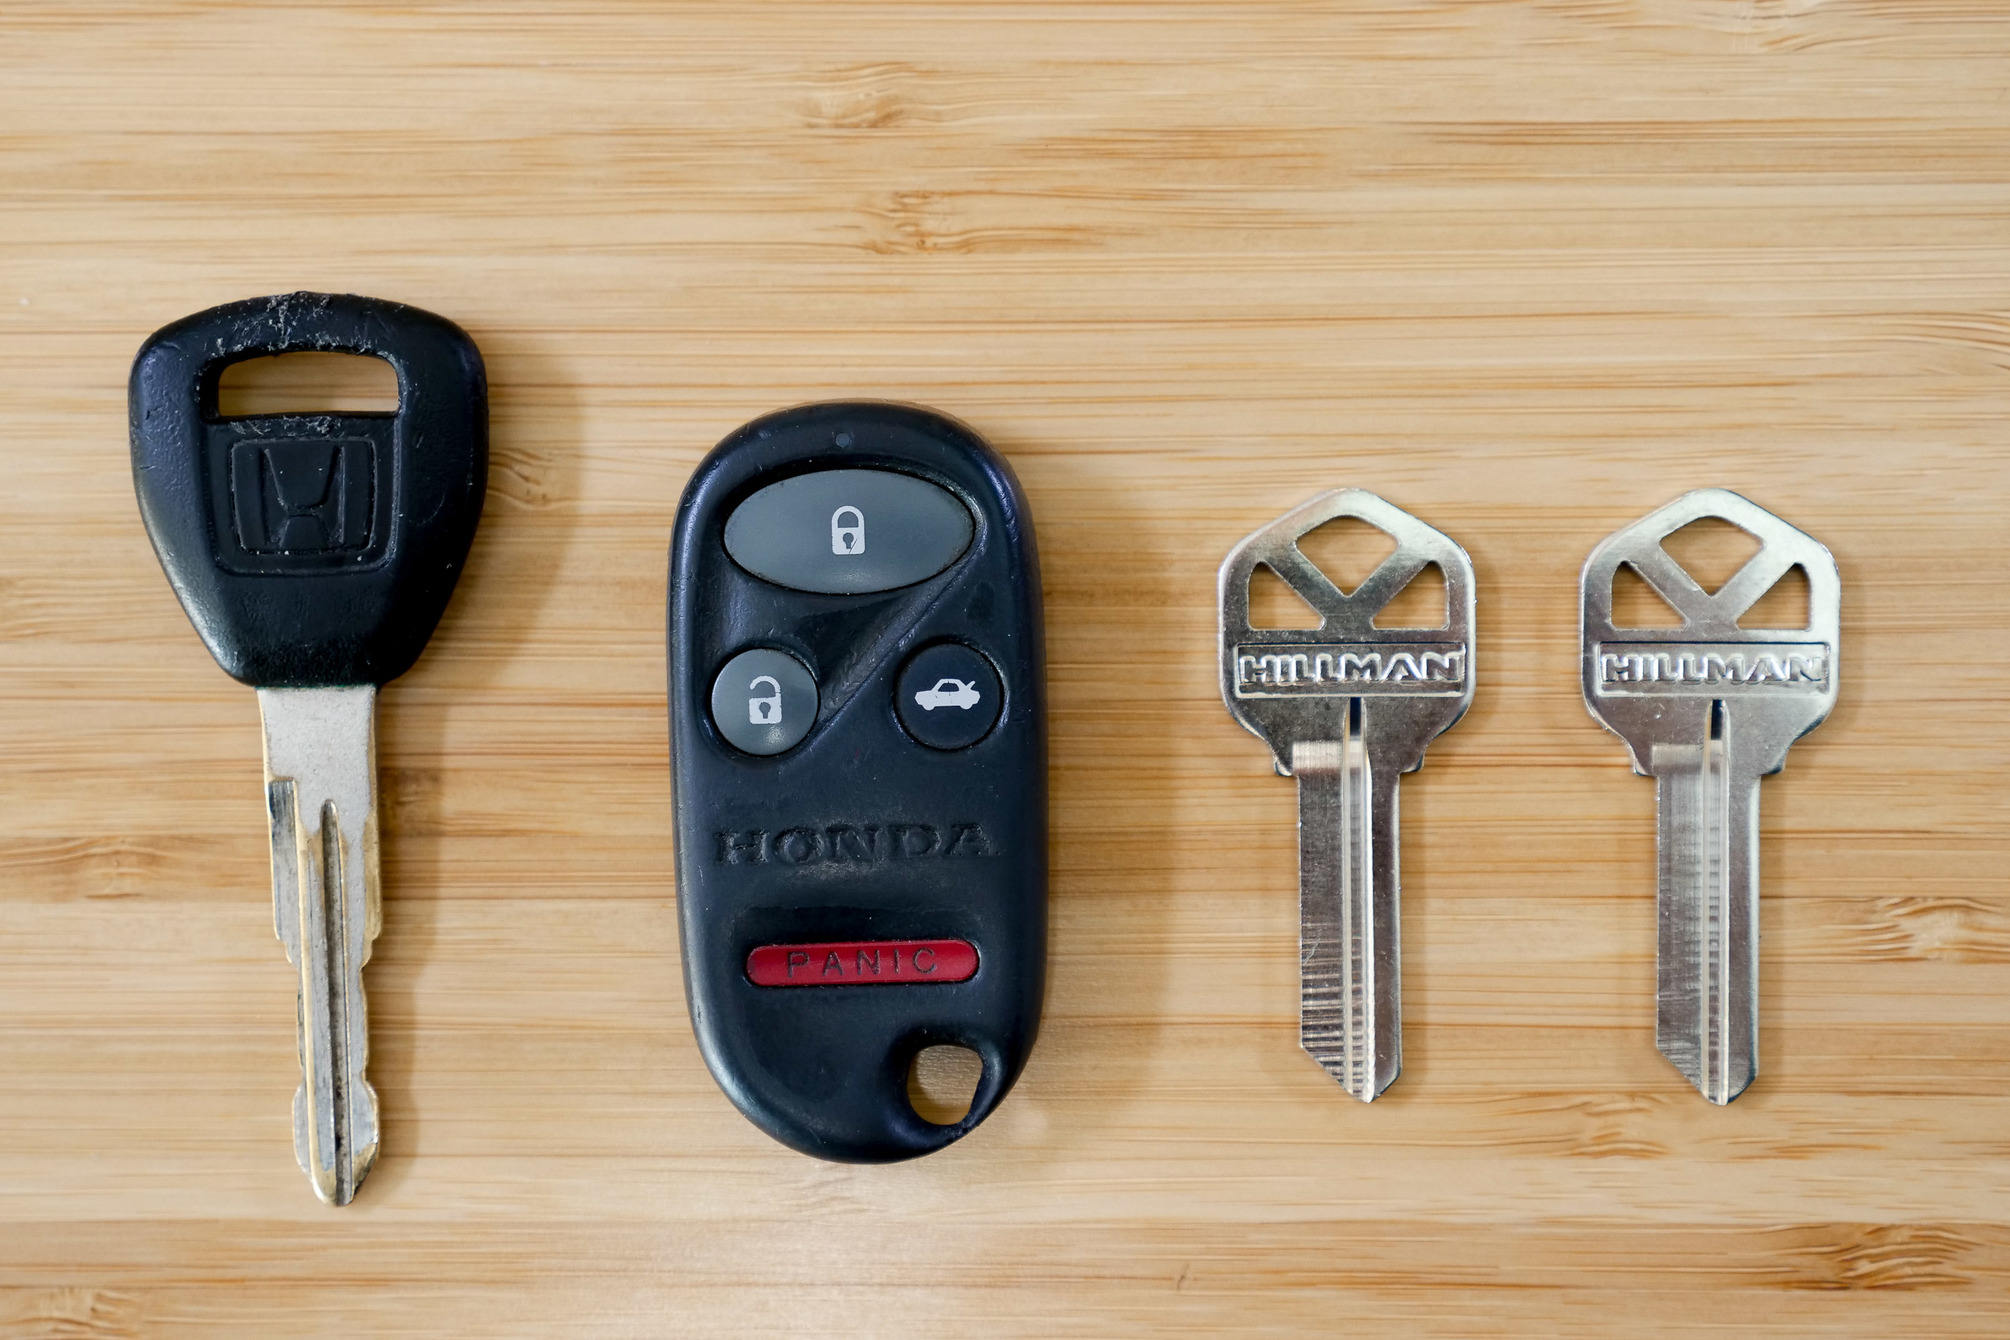 Luxury Leather Case for Keys Keychain Key Organizer 